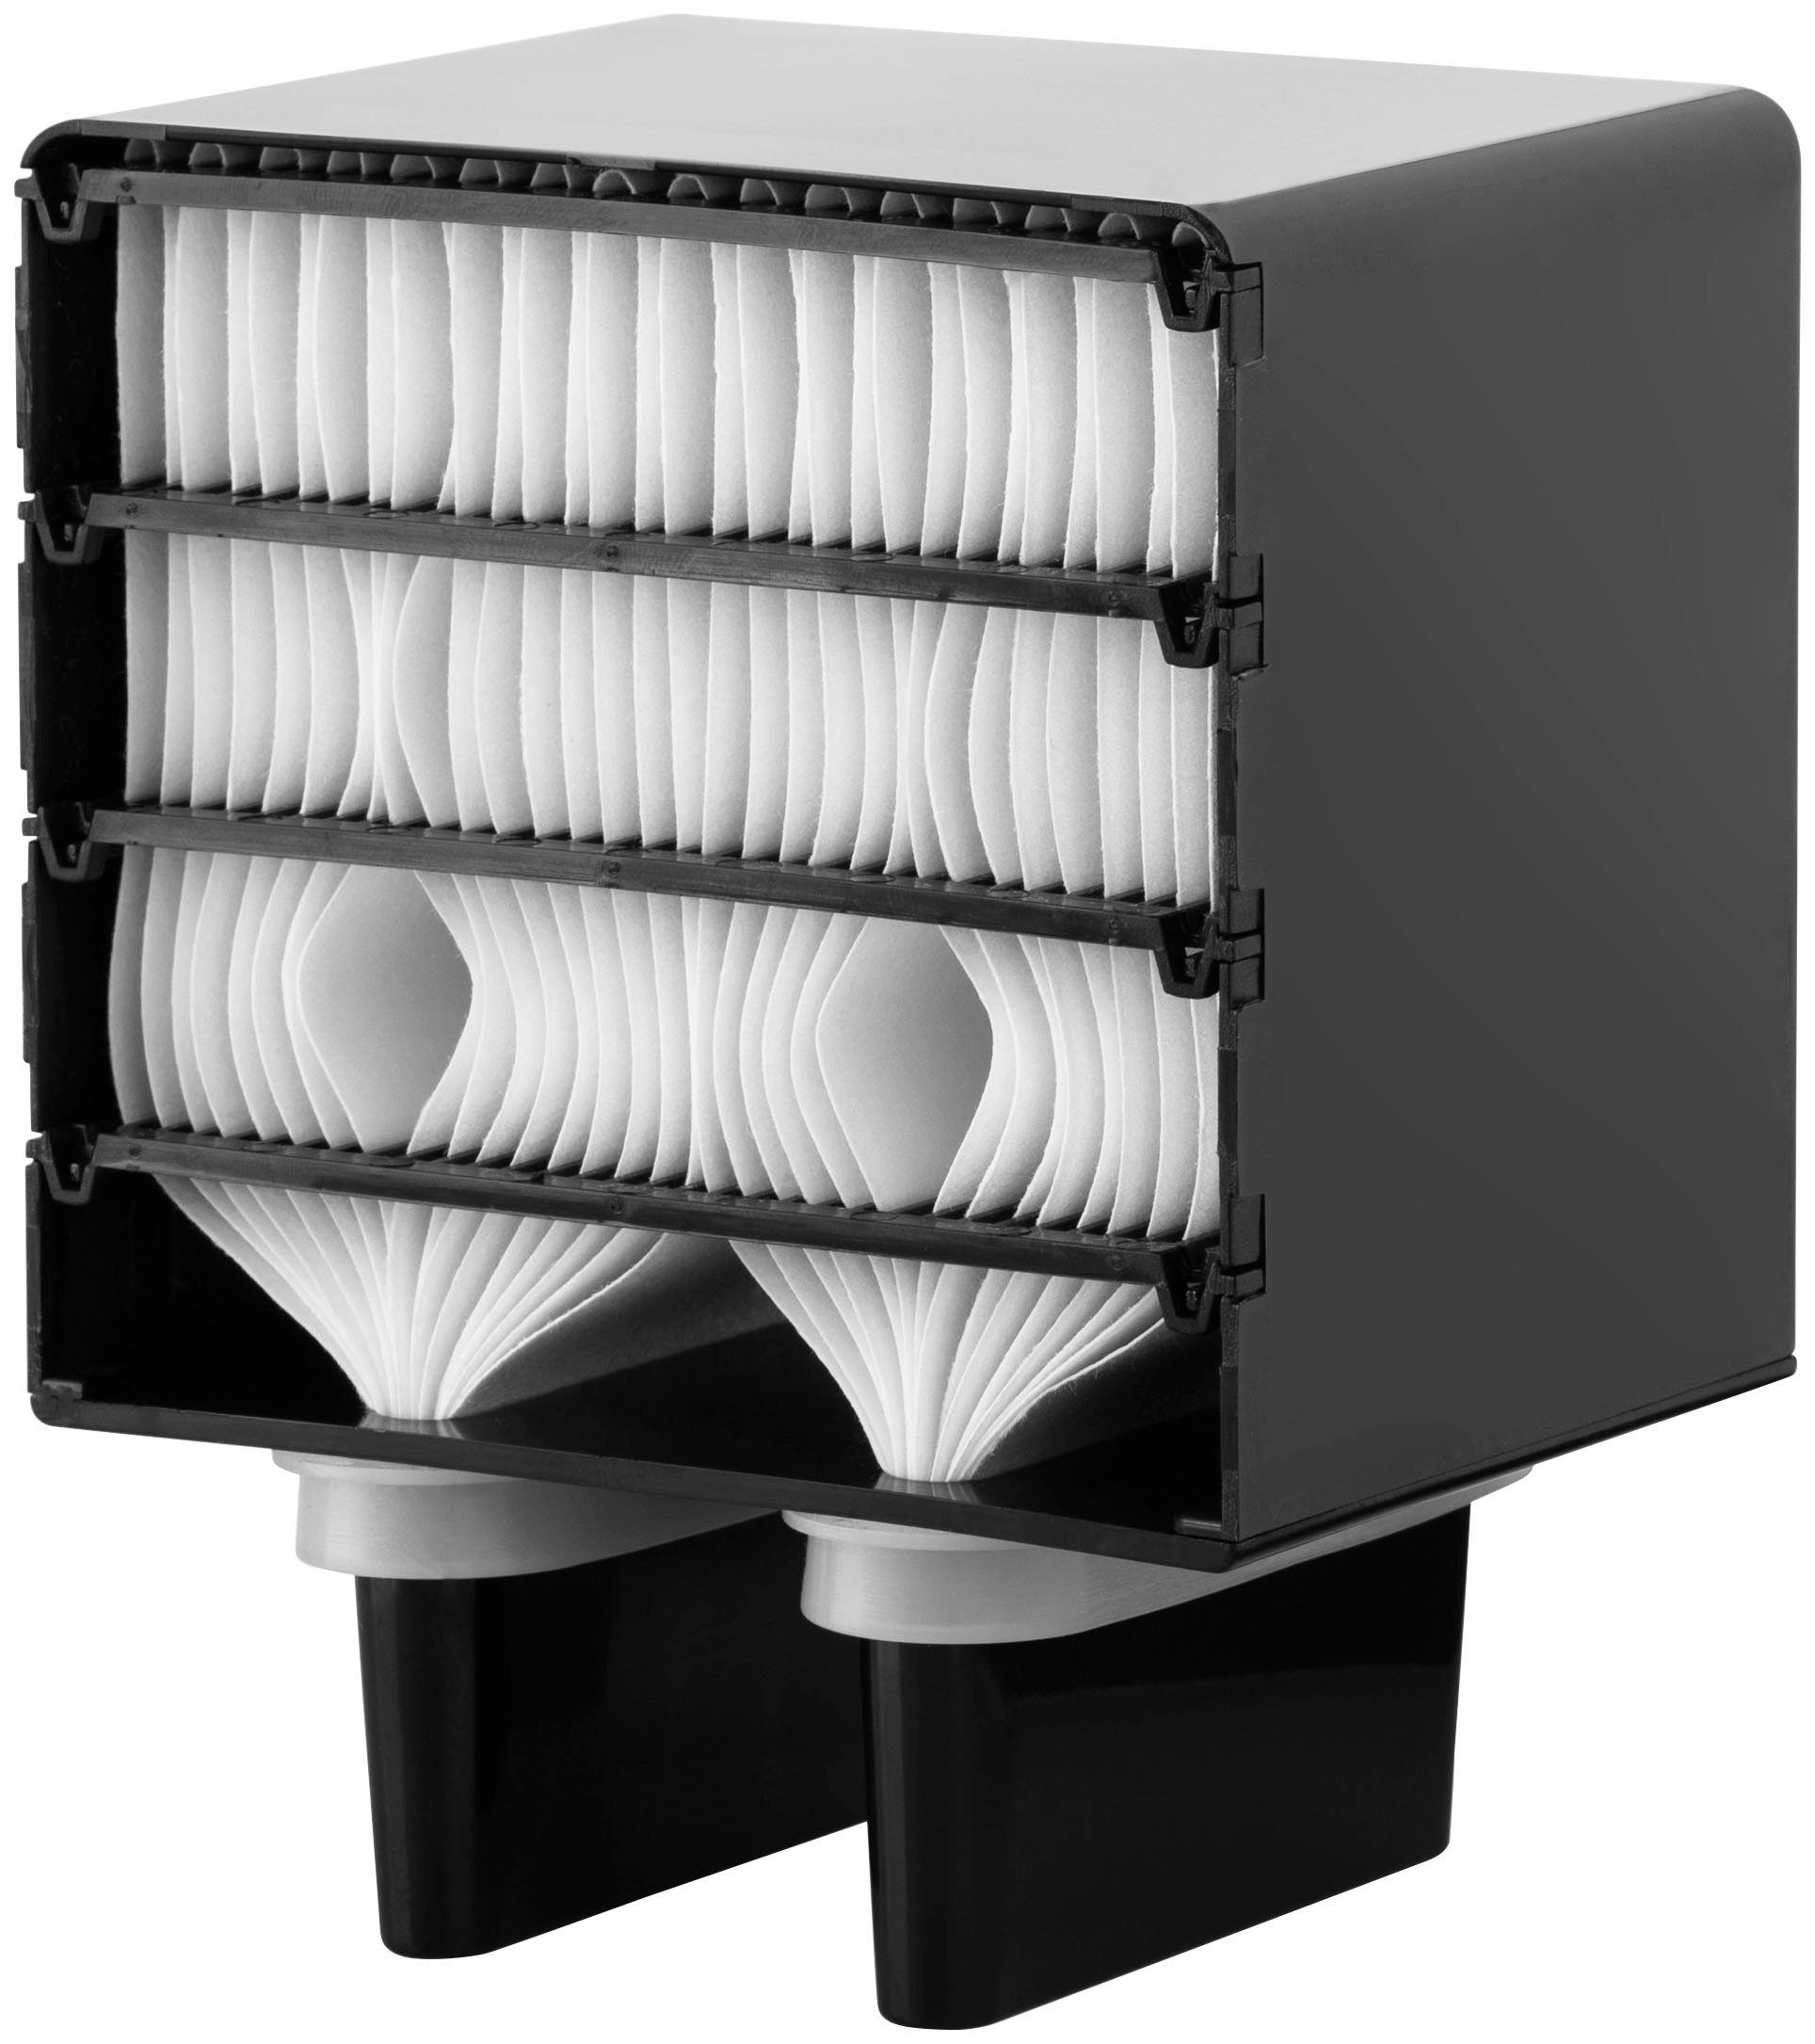 Coolio Fassungsvermögen Ventilatorkombigerät 270 ml Mini, eta Luftkühler,